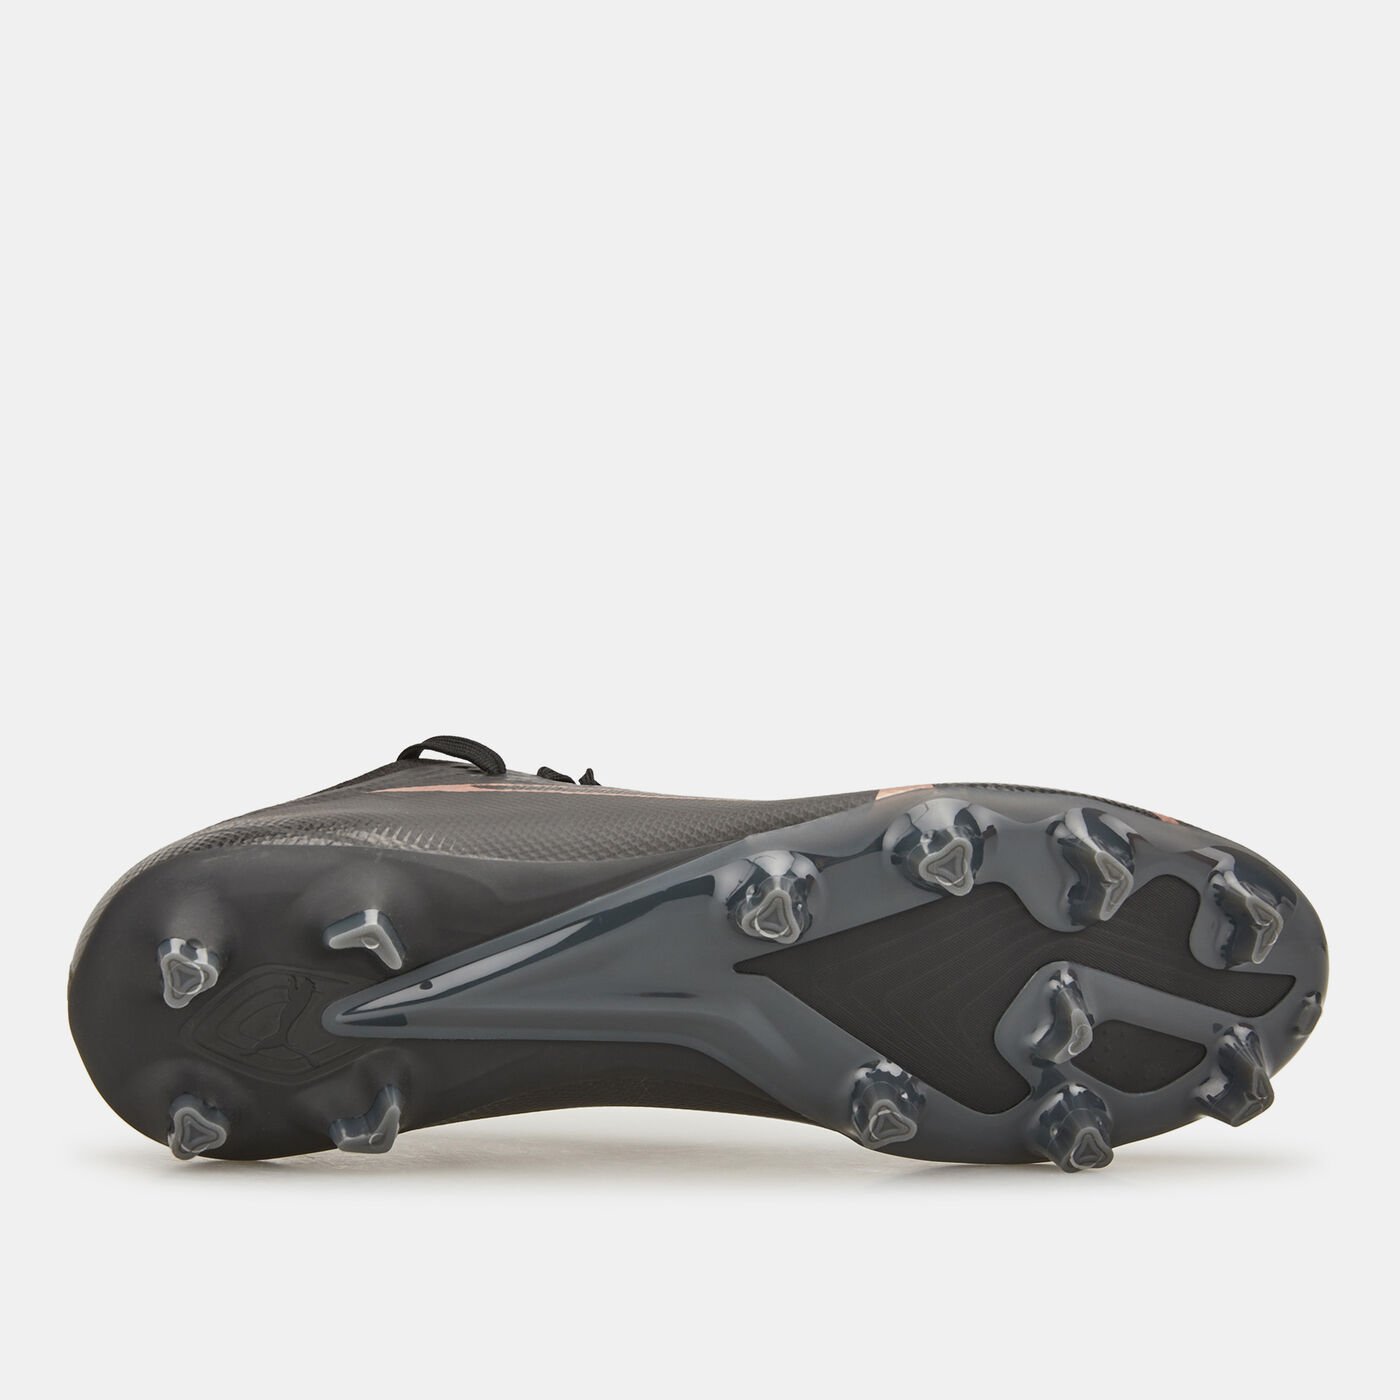 Men's ULTRA MATCH Firm Ground/Artificial Ground Football Shoes